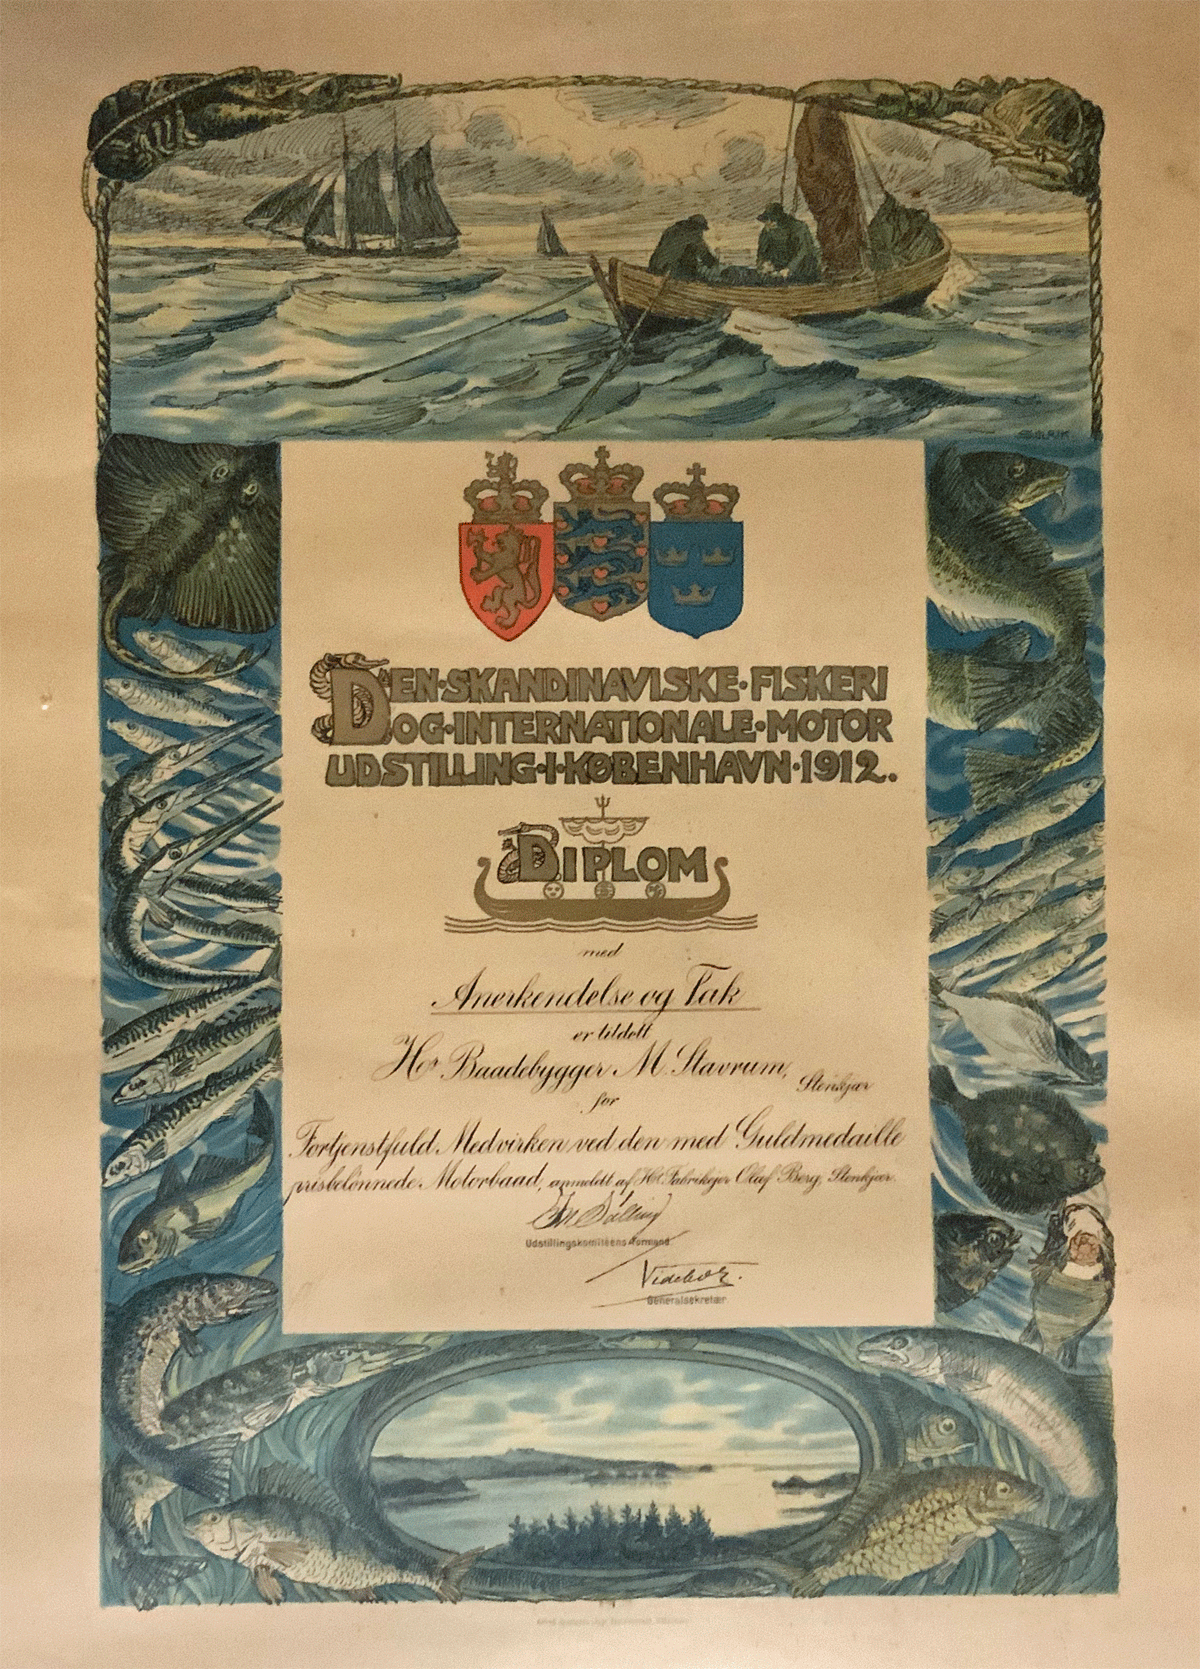 Stavrum - diplom 1912